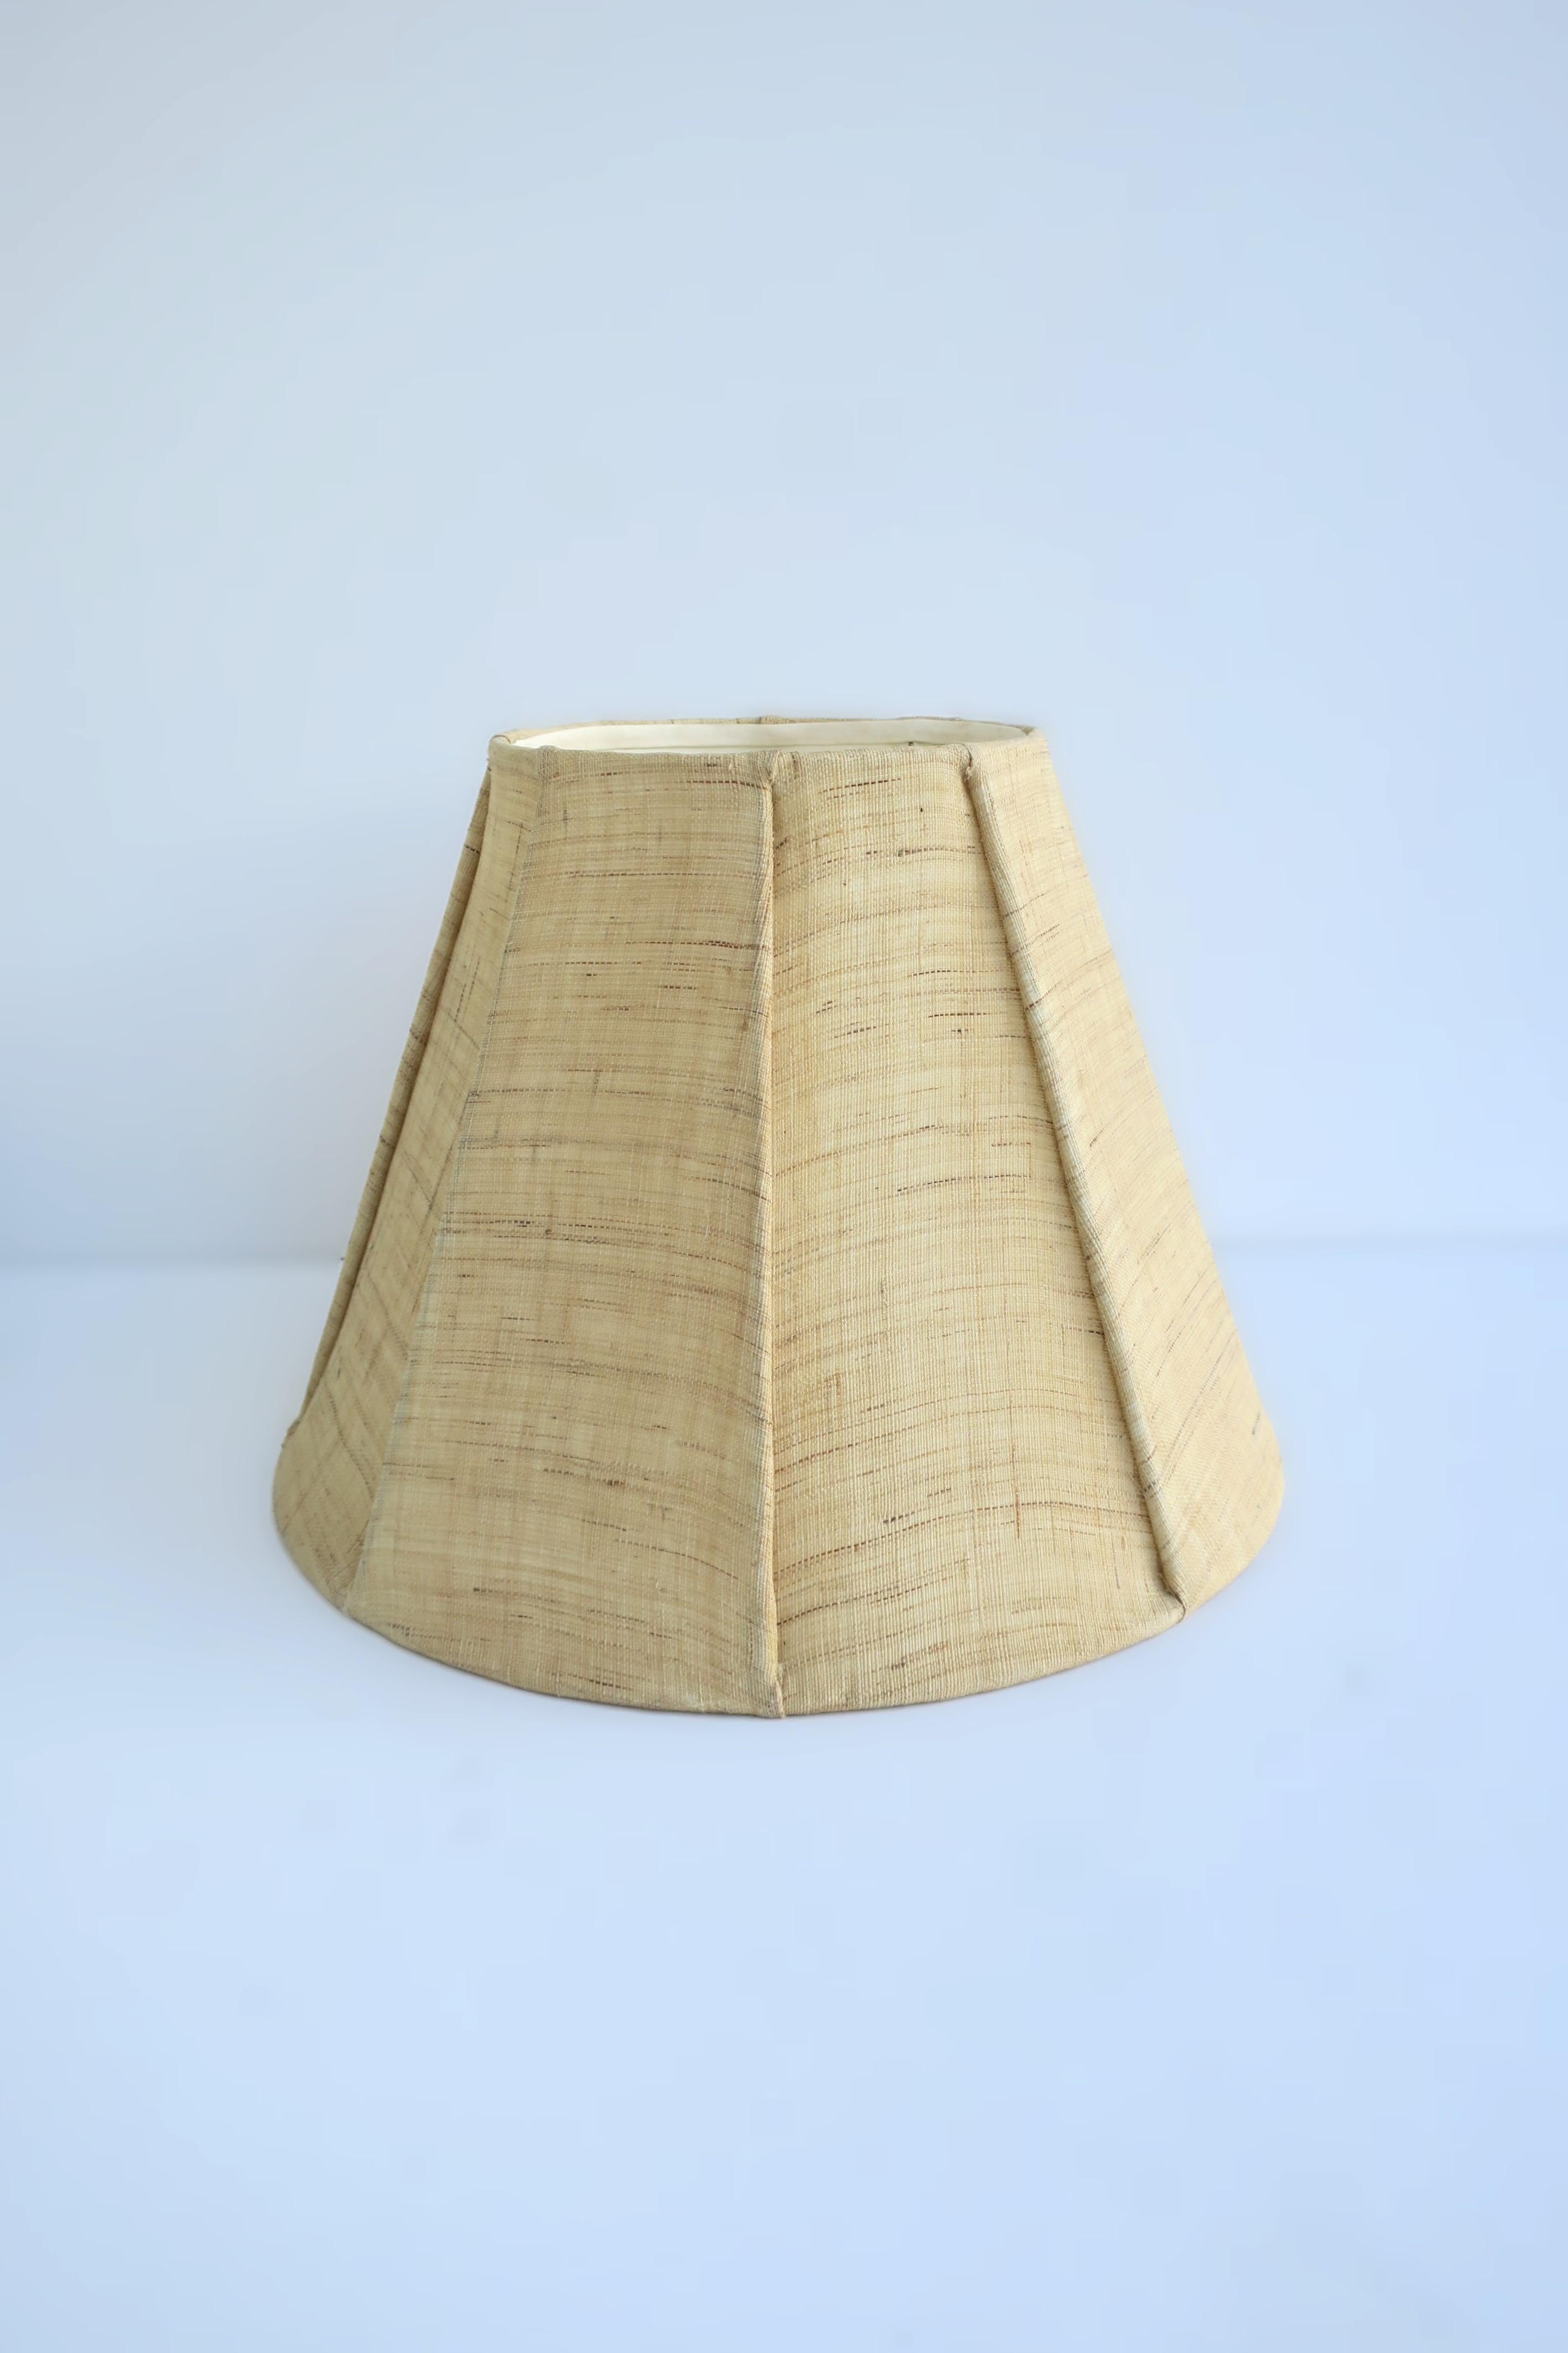 A quality textile cloth and silk lamp shade in neutral hues, circa late-20th century. Dimensions: 16